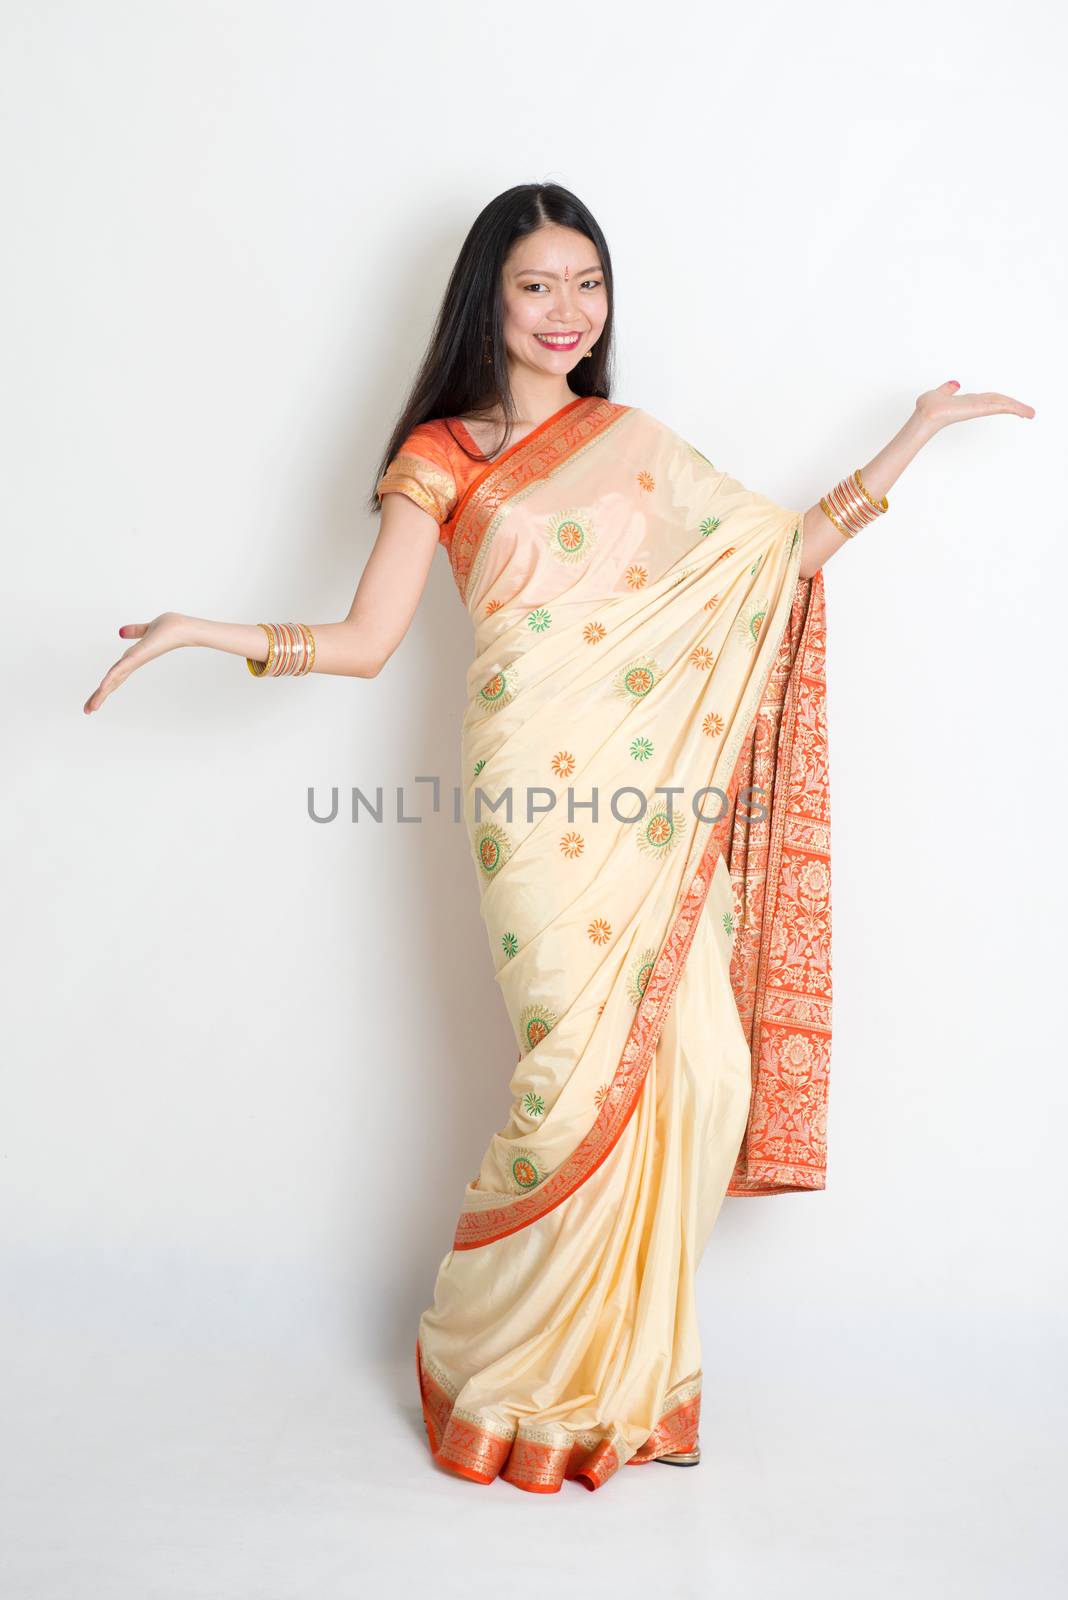 Young girl in Indian sari dress welcoming by szefei